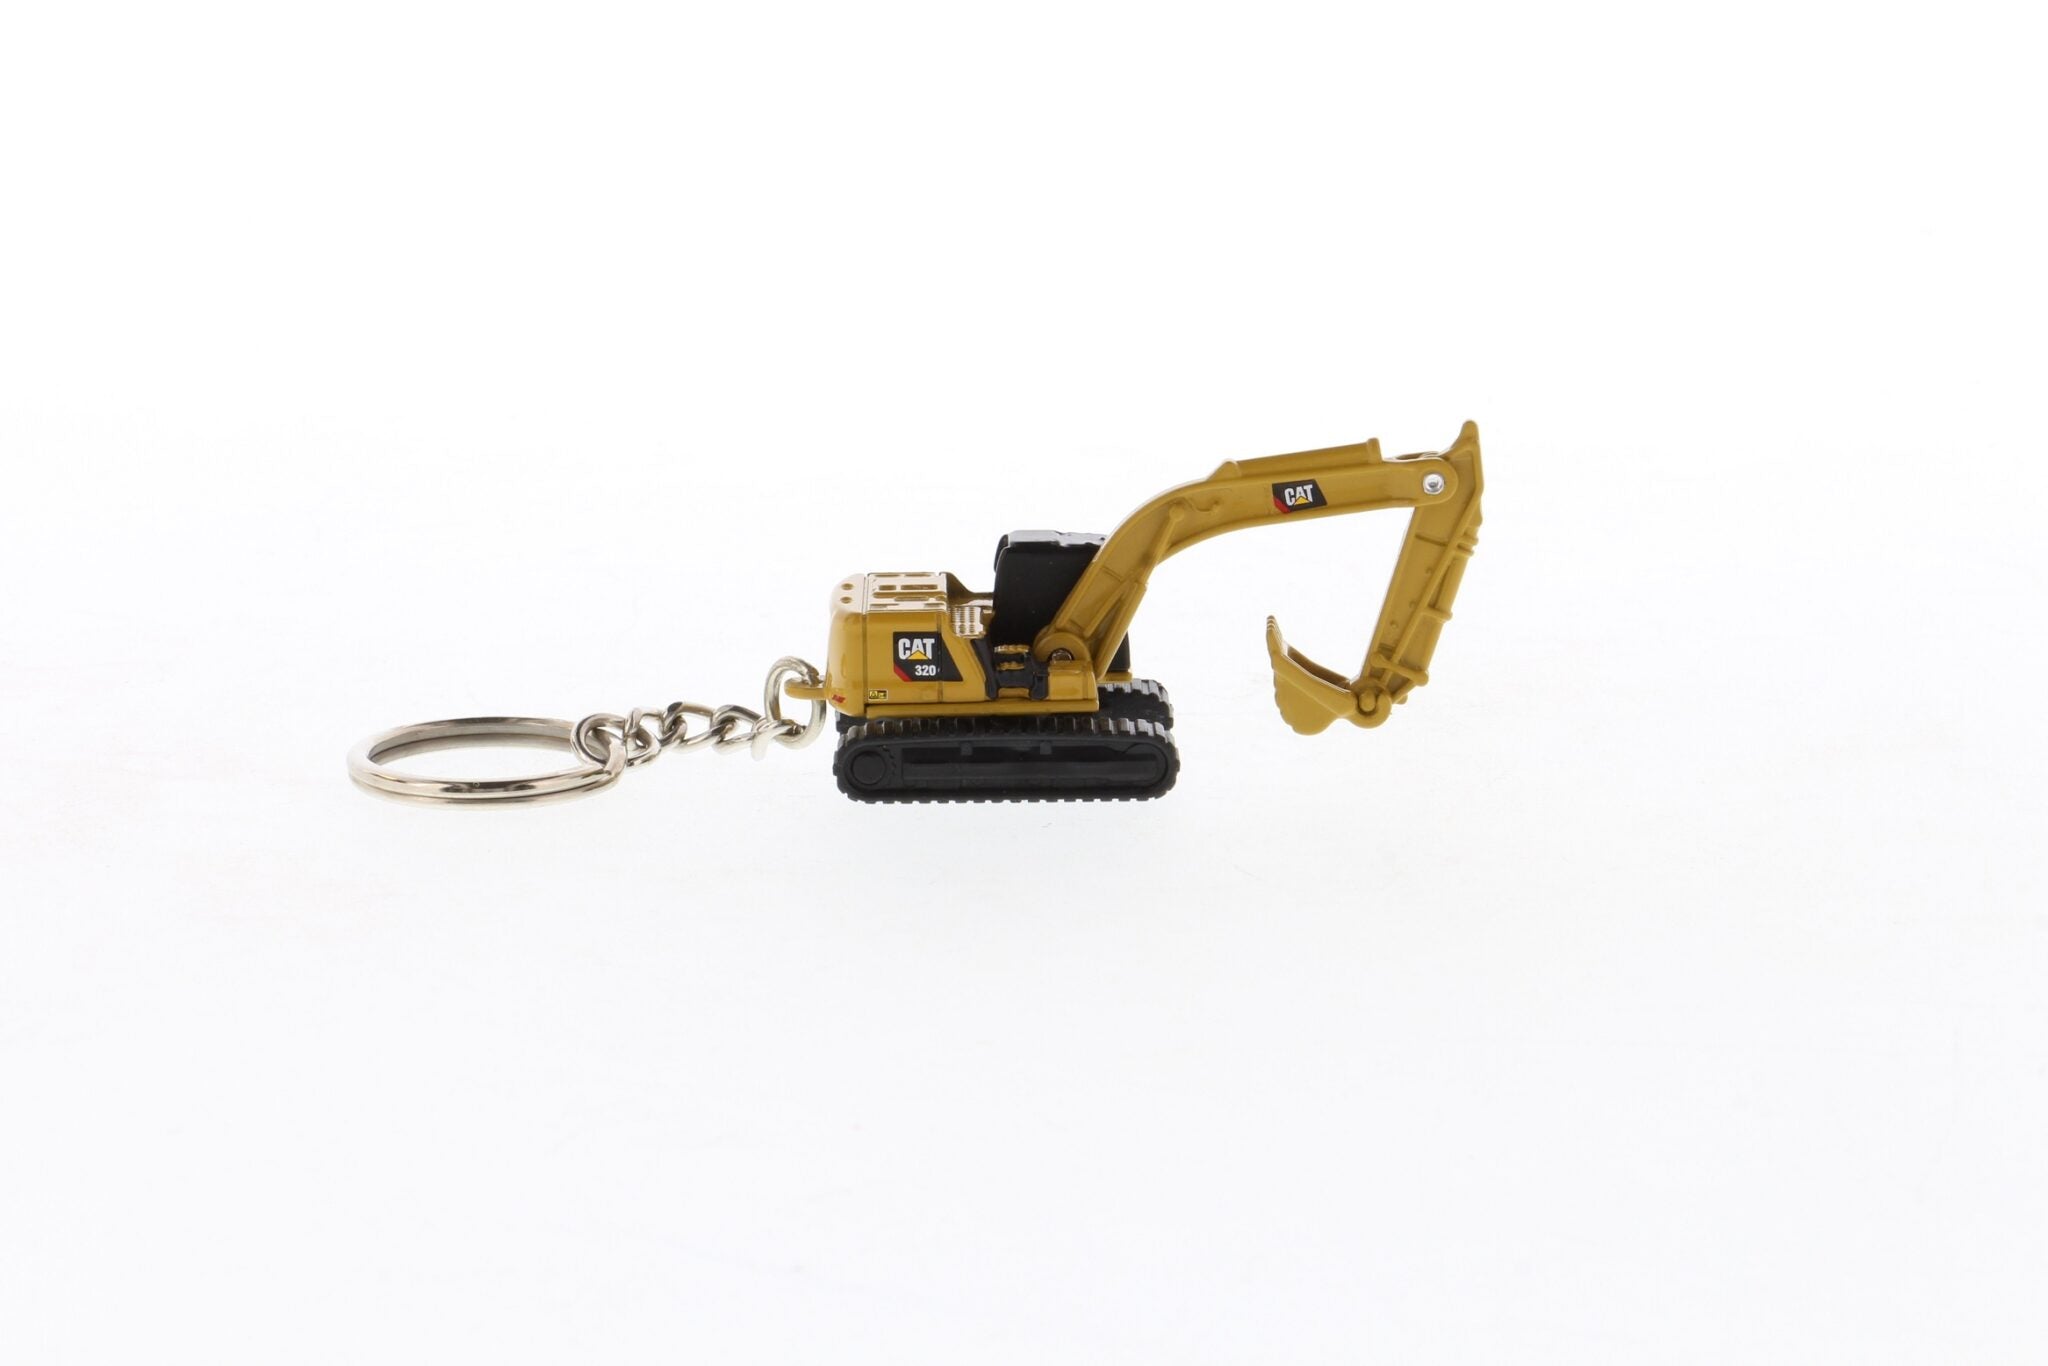 CAT Micro 320 Hydraulic Excavator Key chain